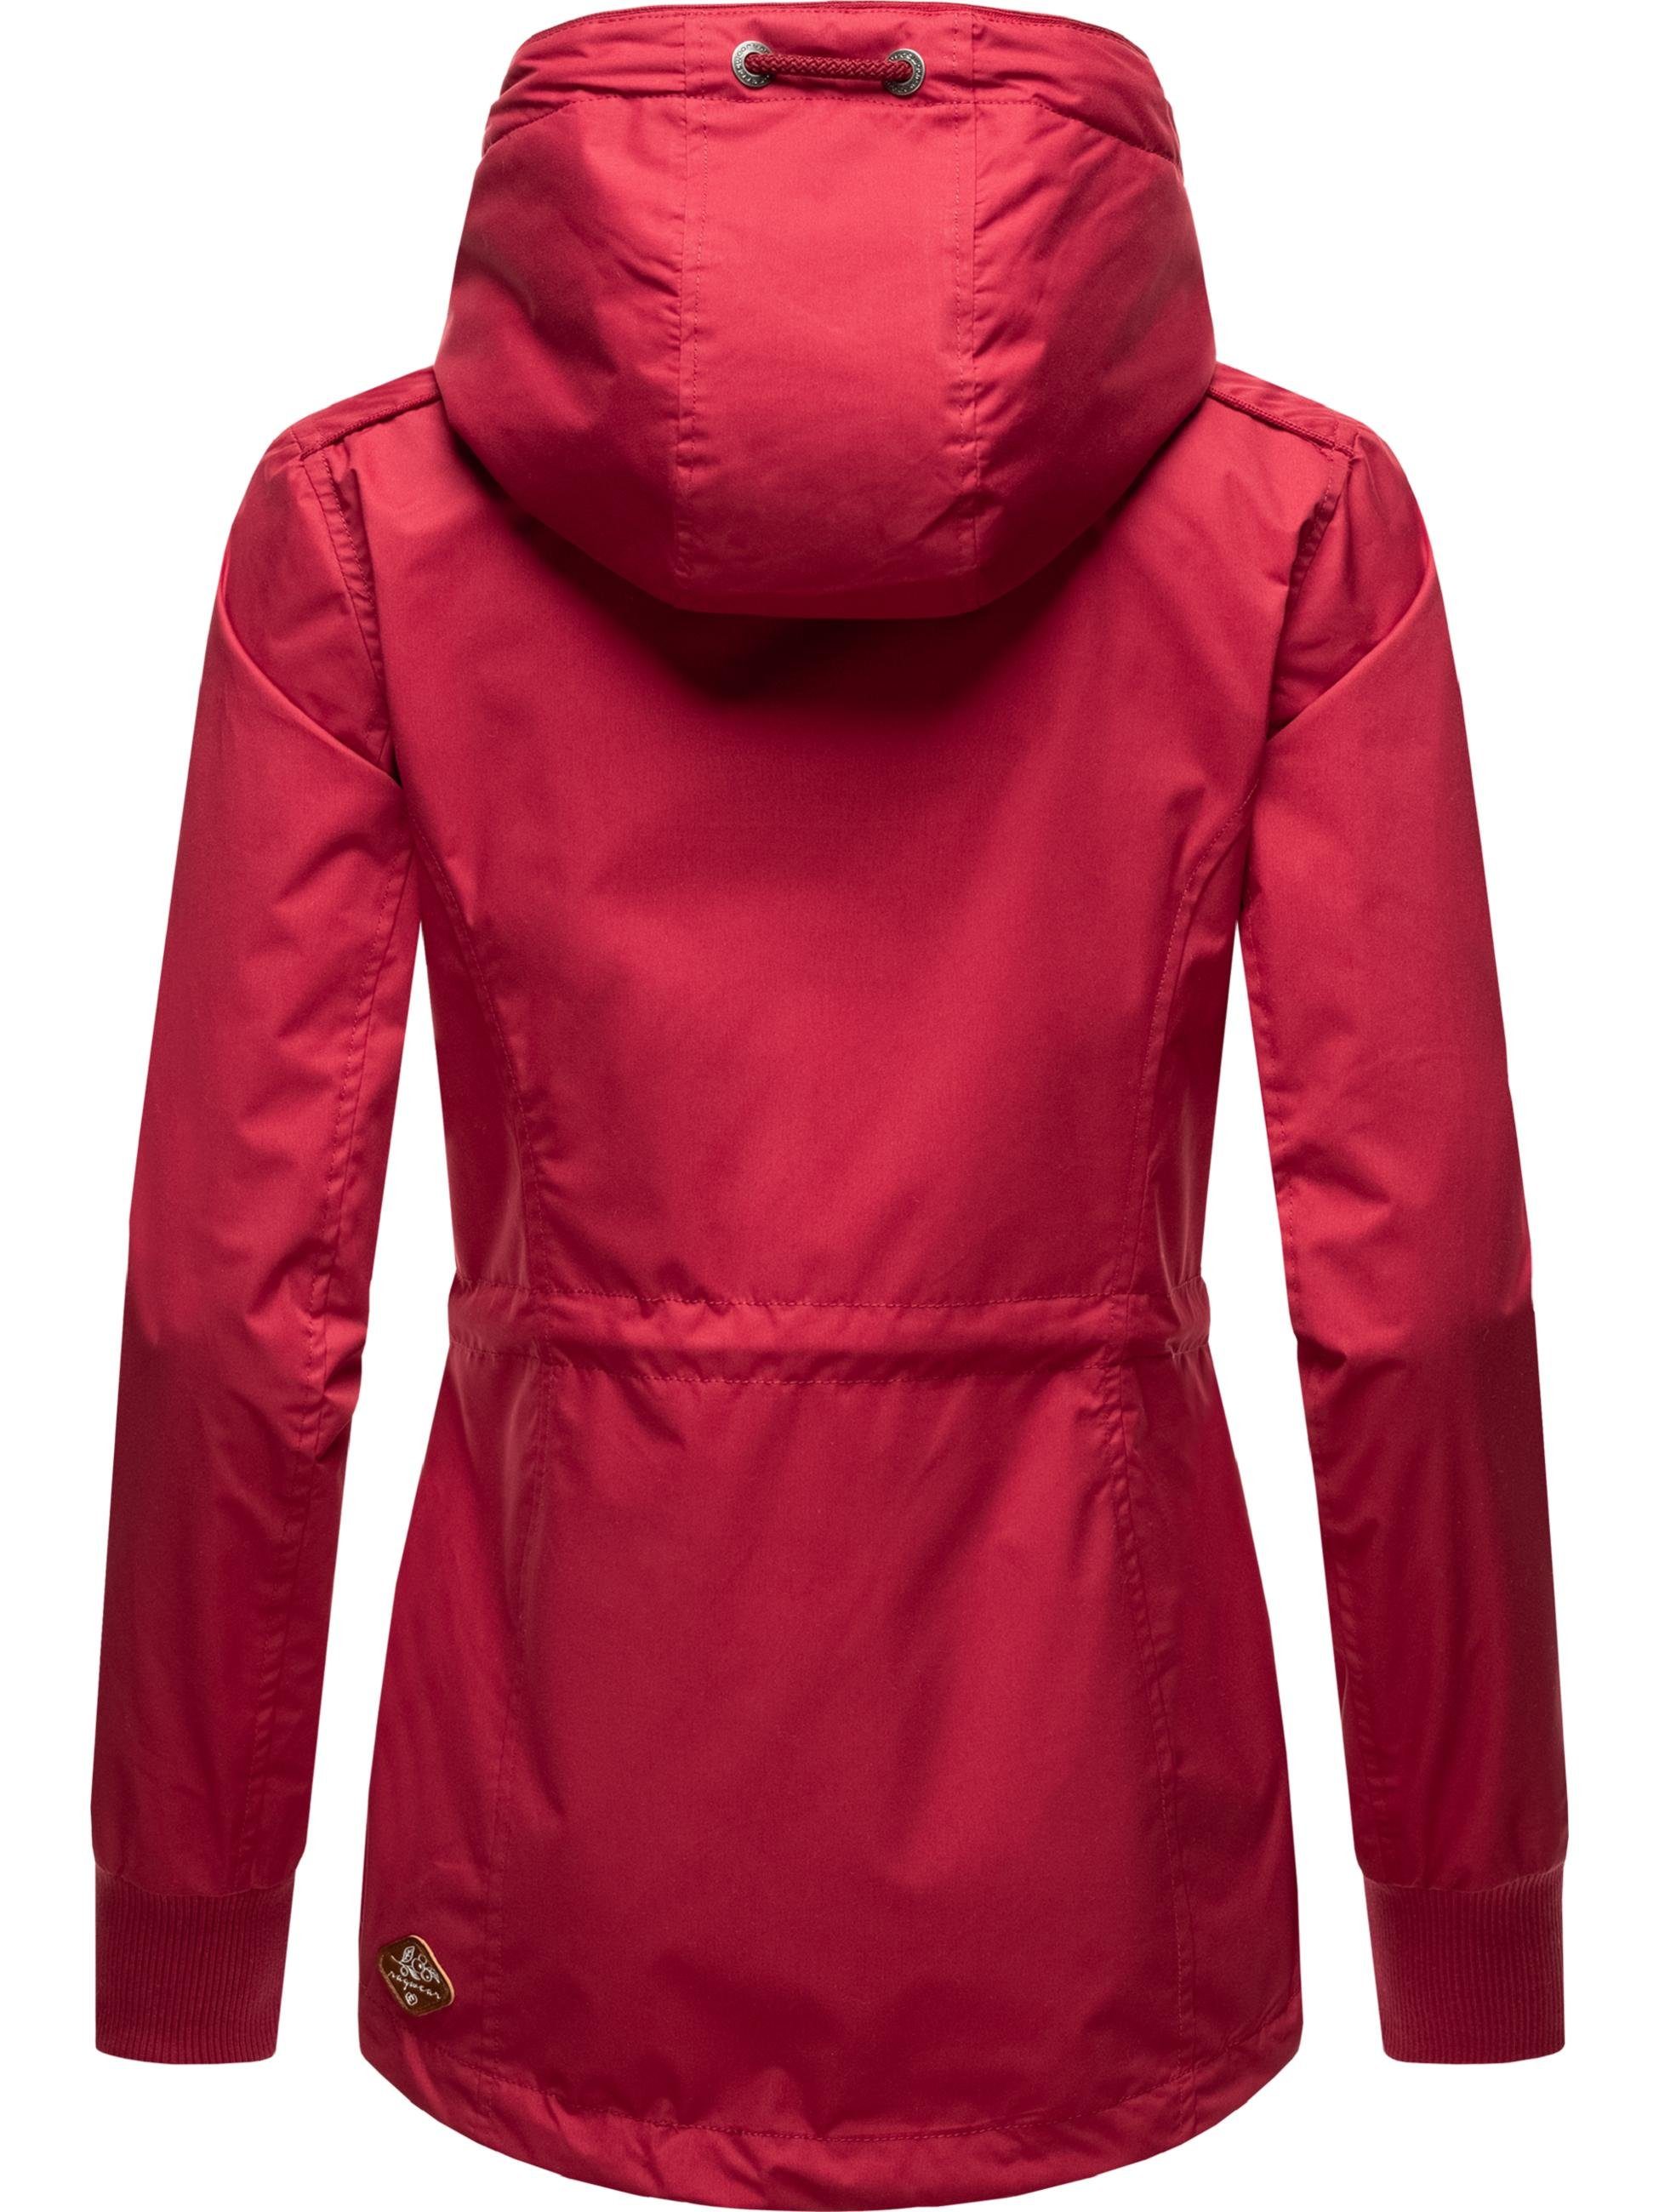 Übergangsjacke Kapuze mit Outdoorjacke Danka Red21 stylische großer Ragwear